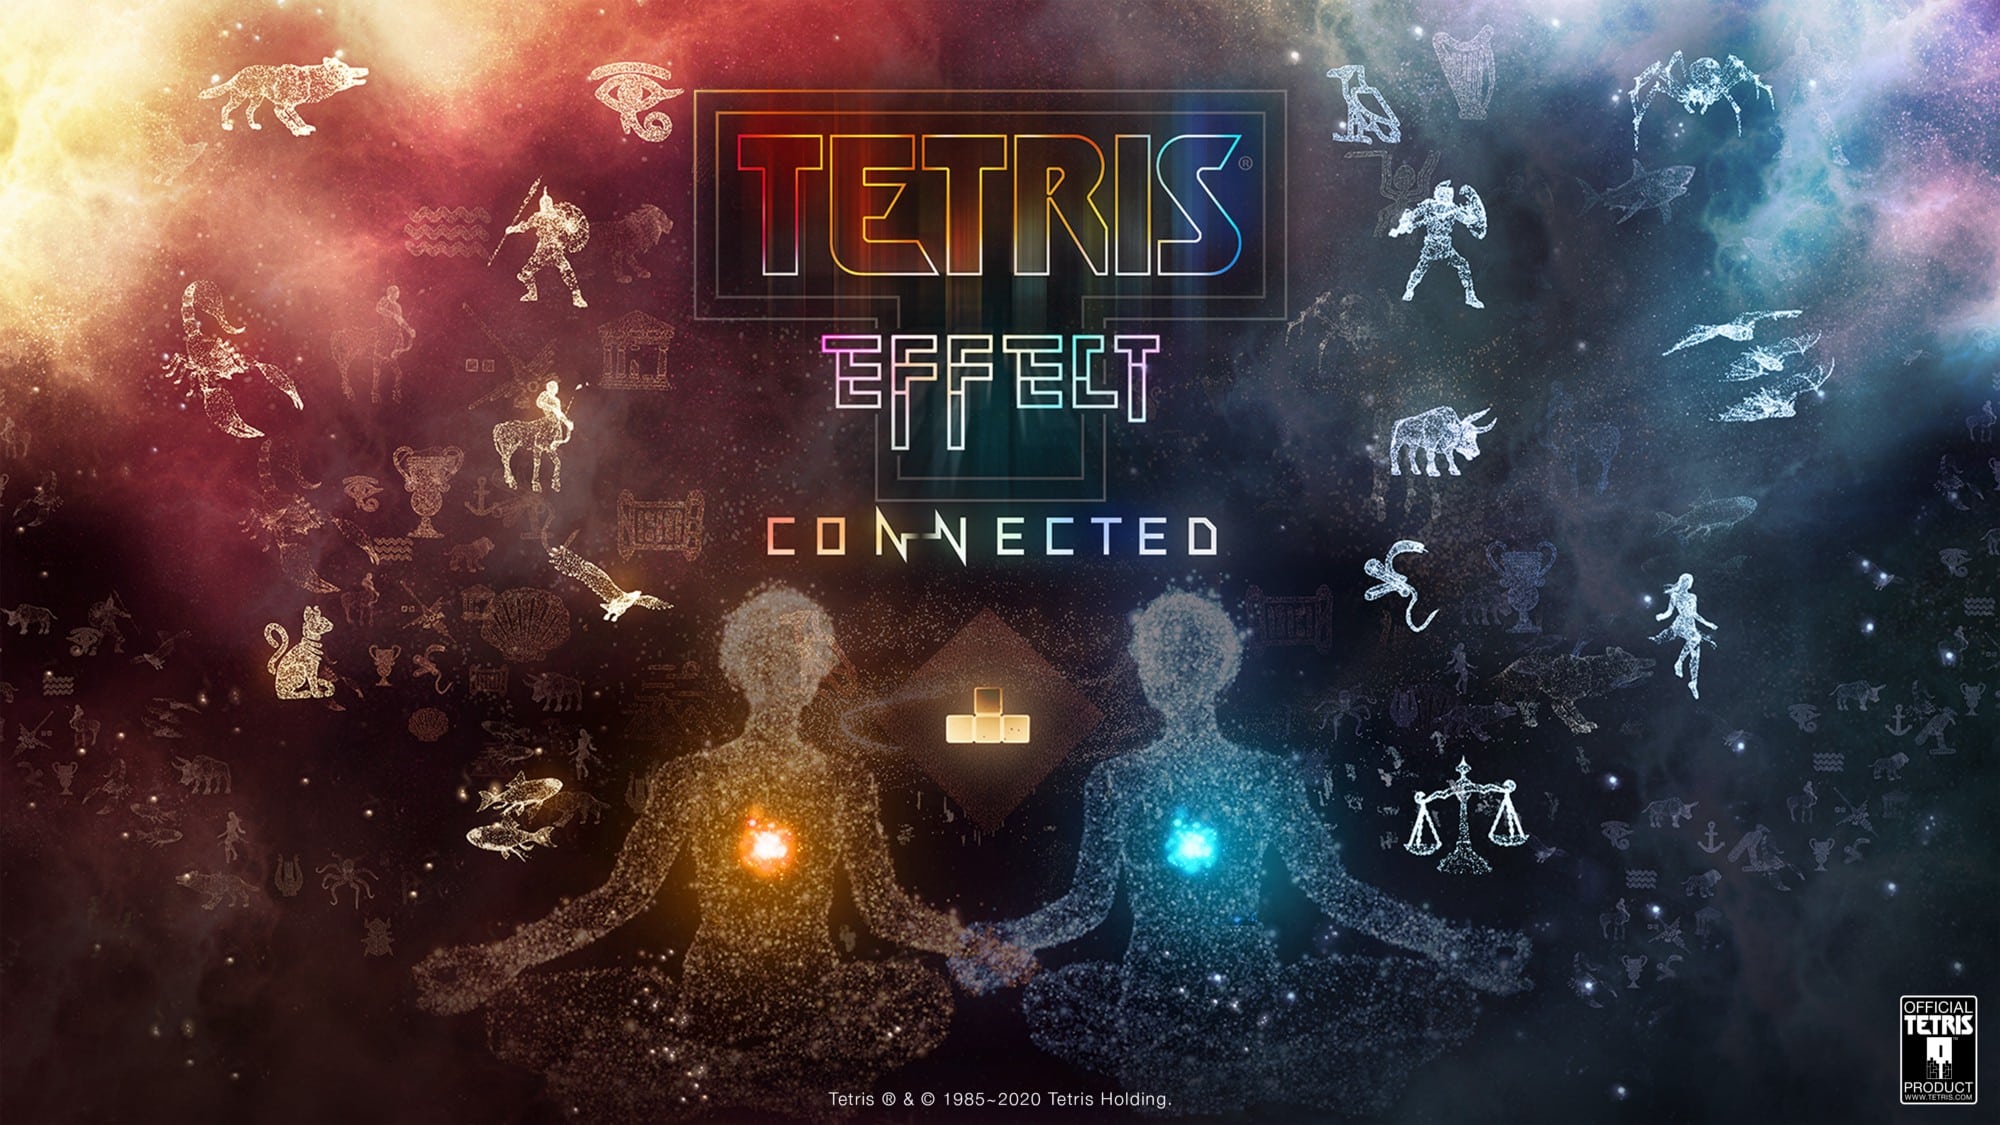 Tetris effect - connected